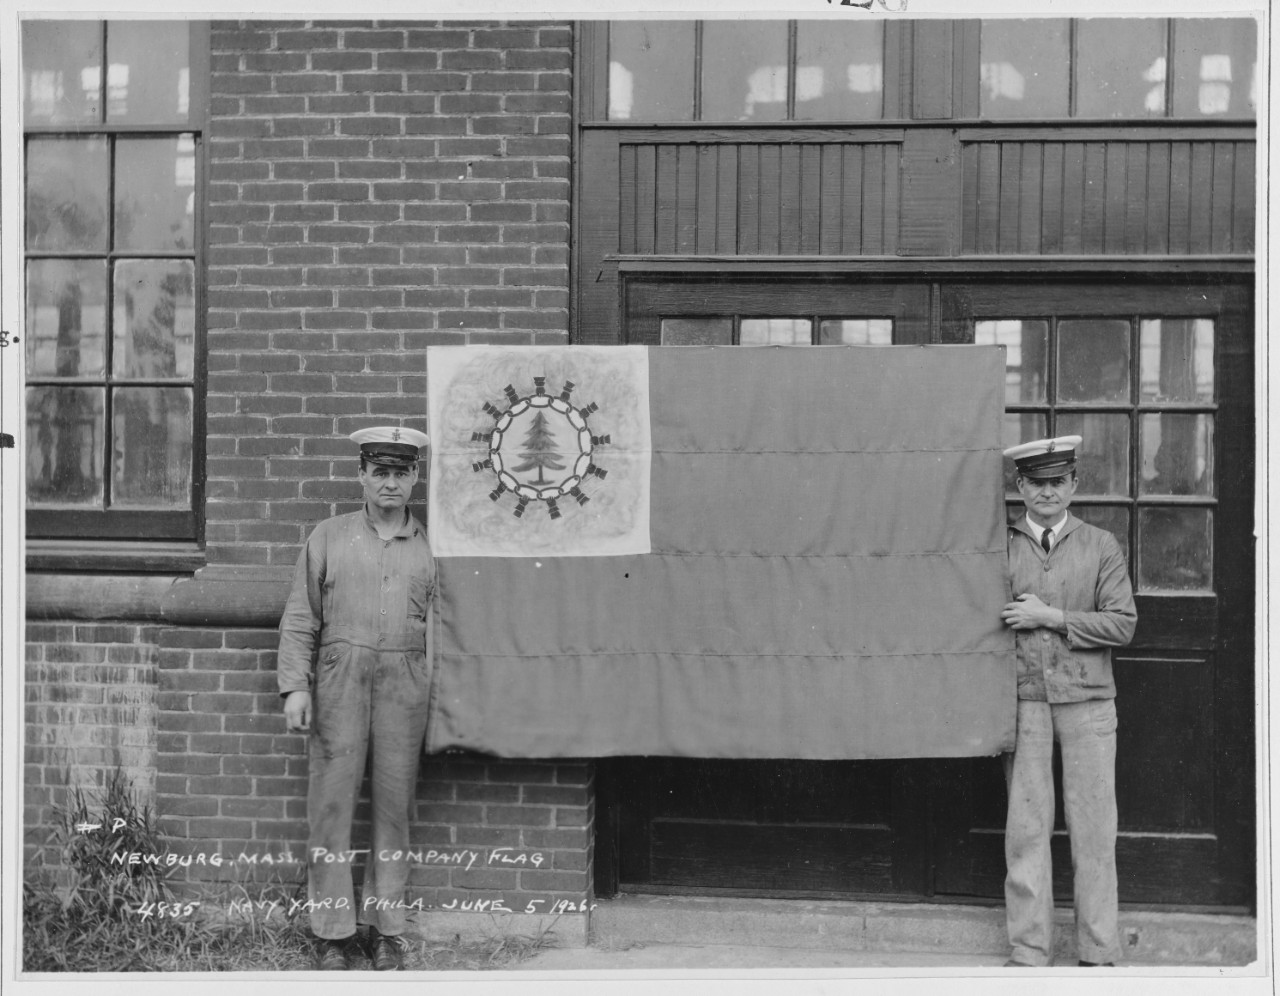 Newburg, Mass. Post Company Flag.